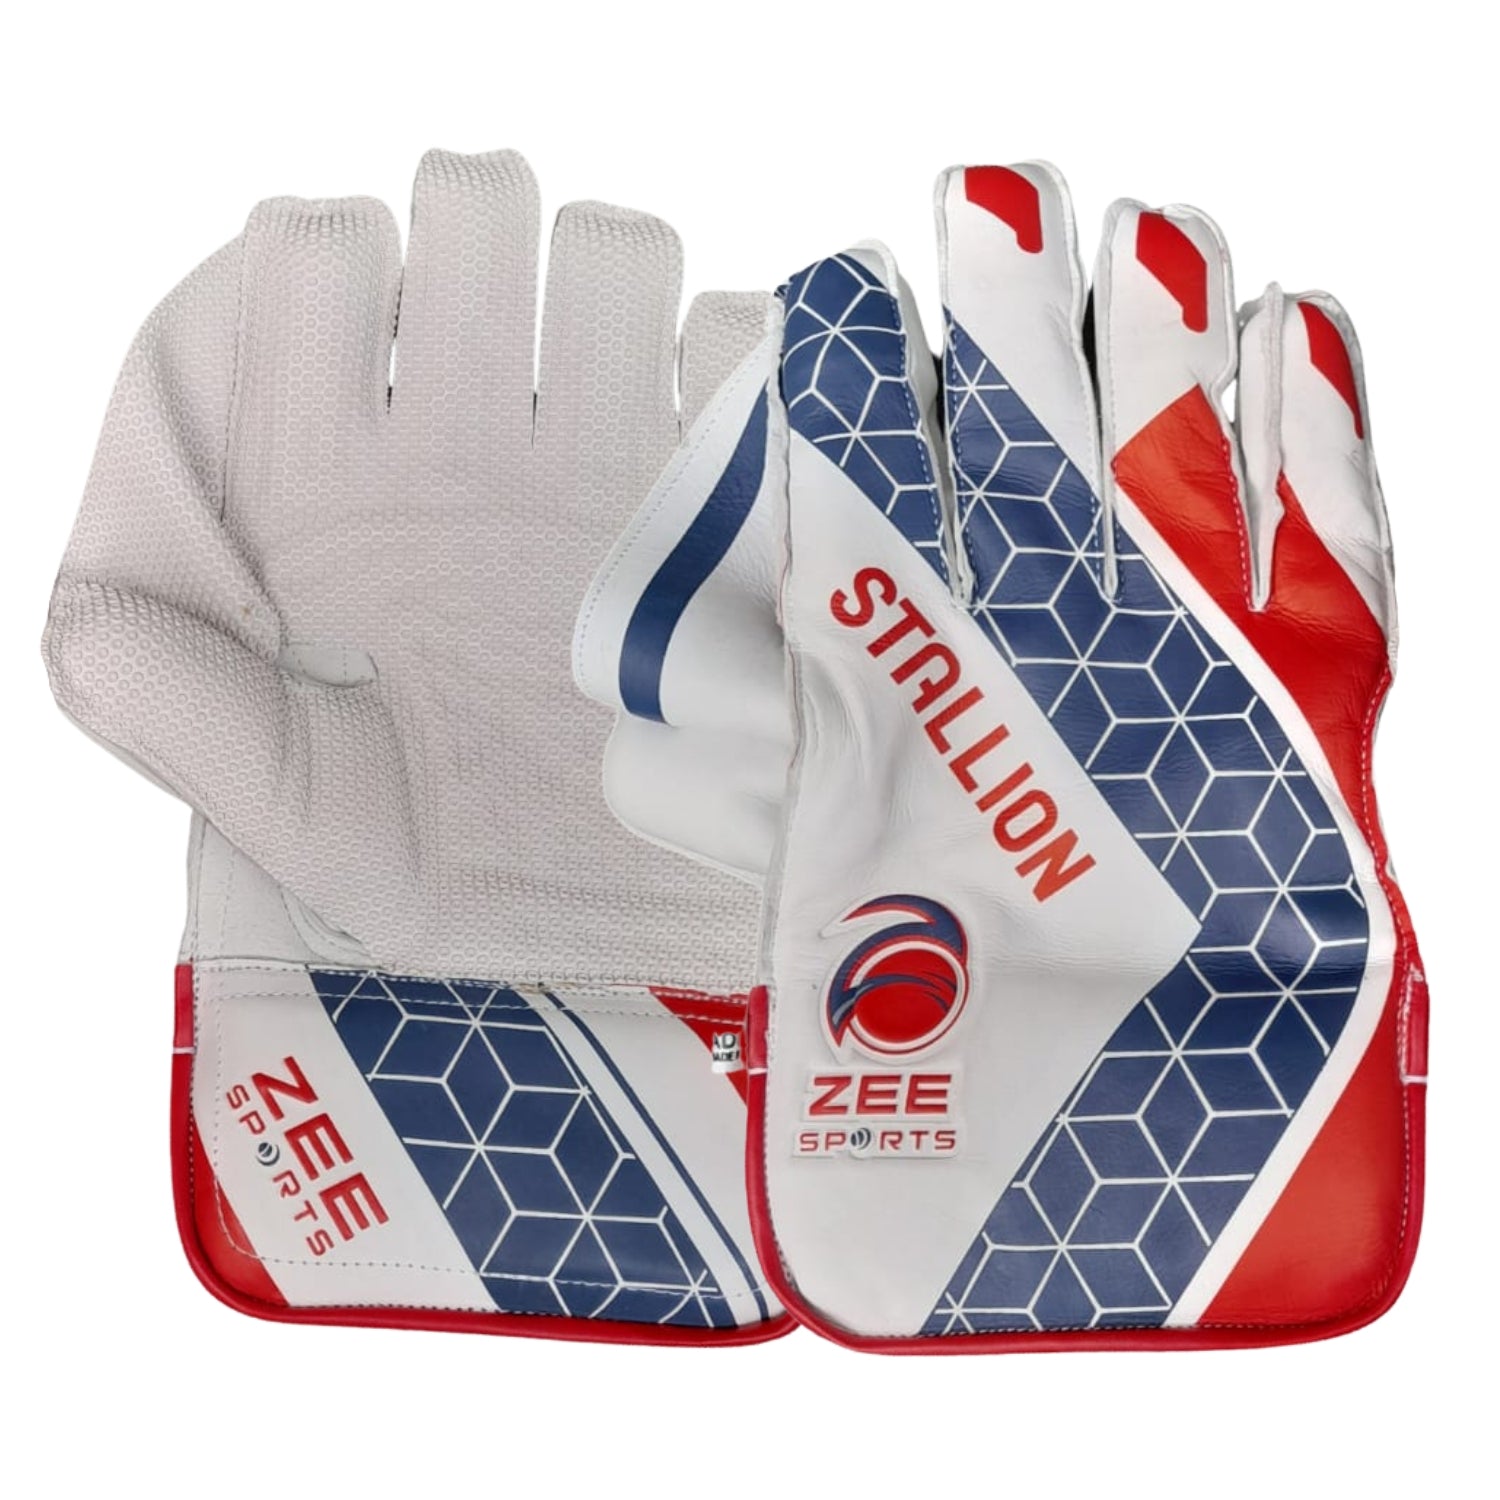 ZeeSports Wicket Keeping Gloves, Model Stallion 5-Star, Adult